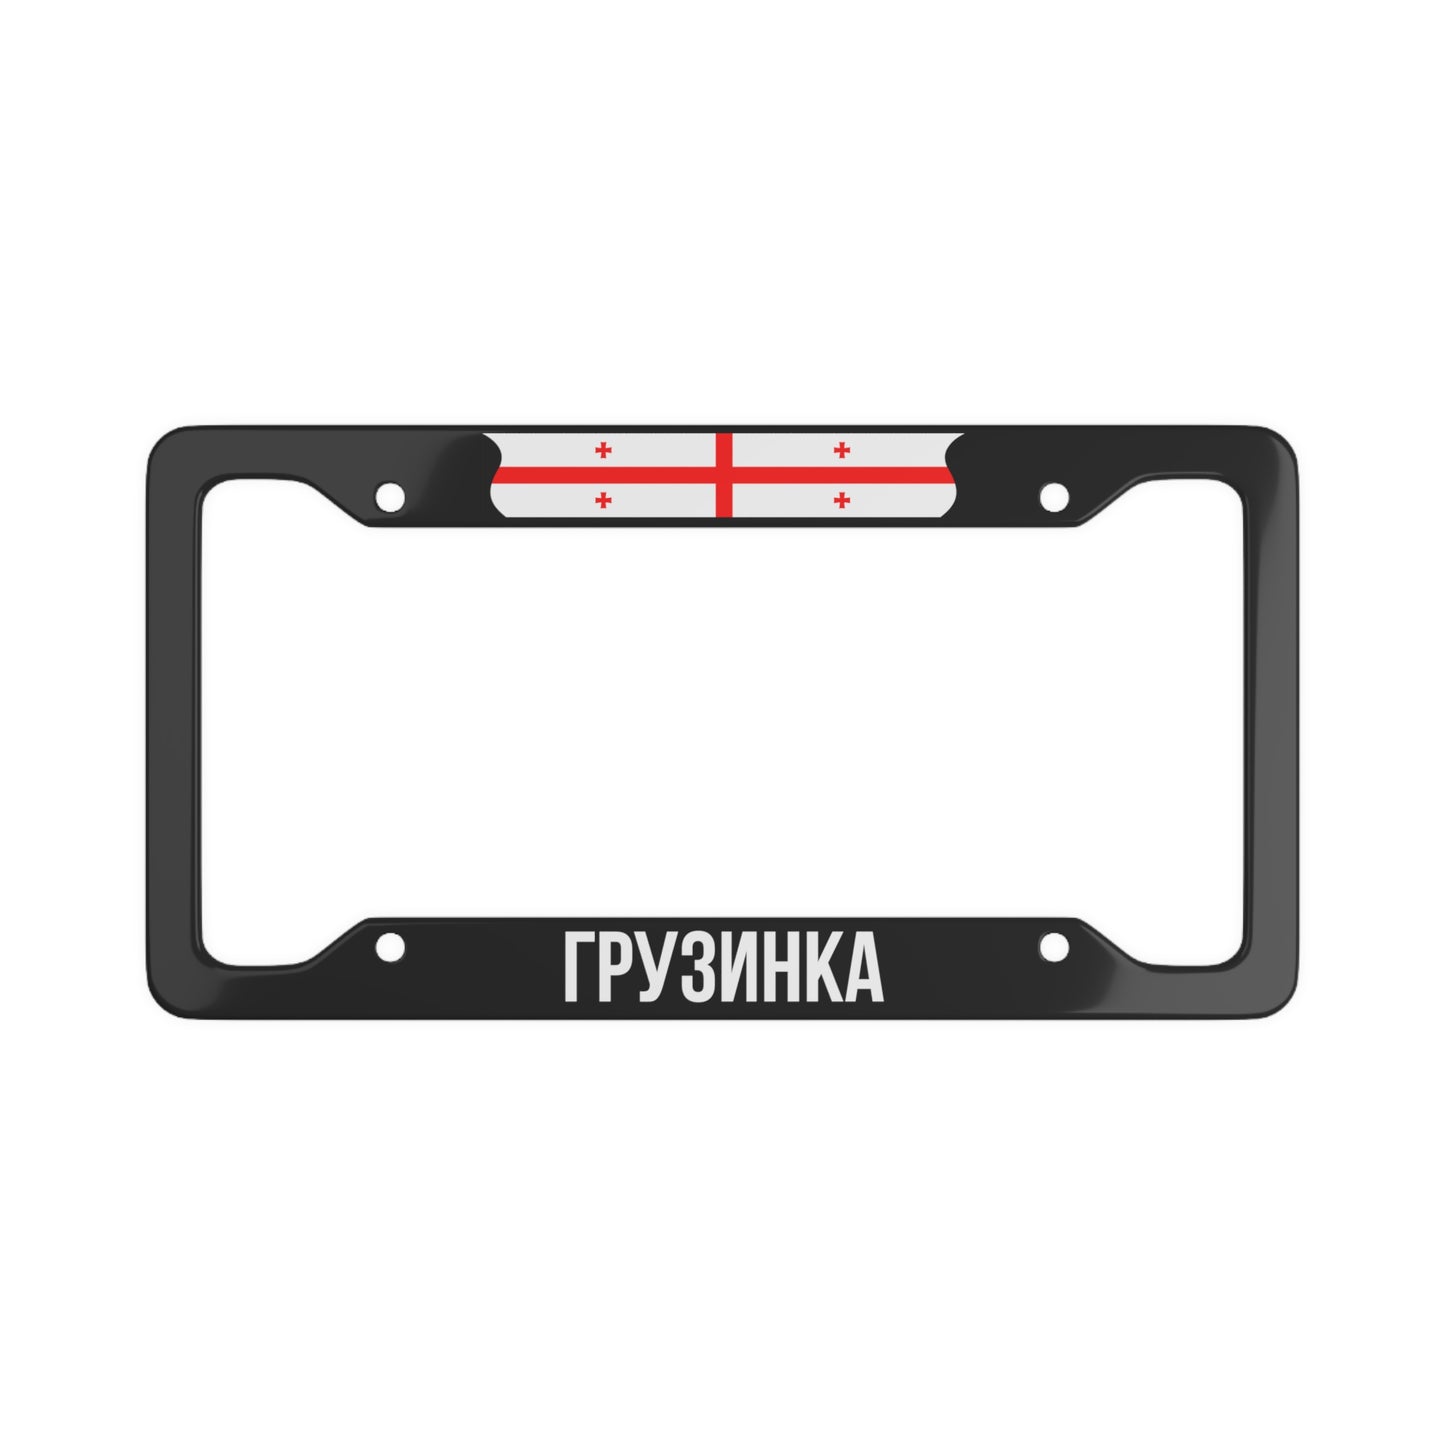 Грузинка Flag Only License Plate Frame